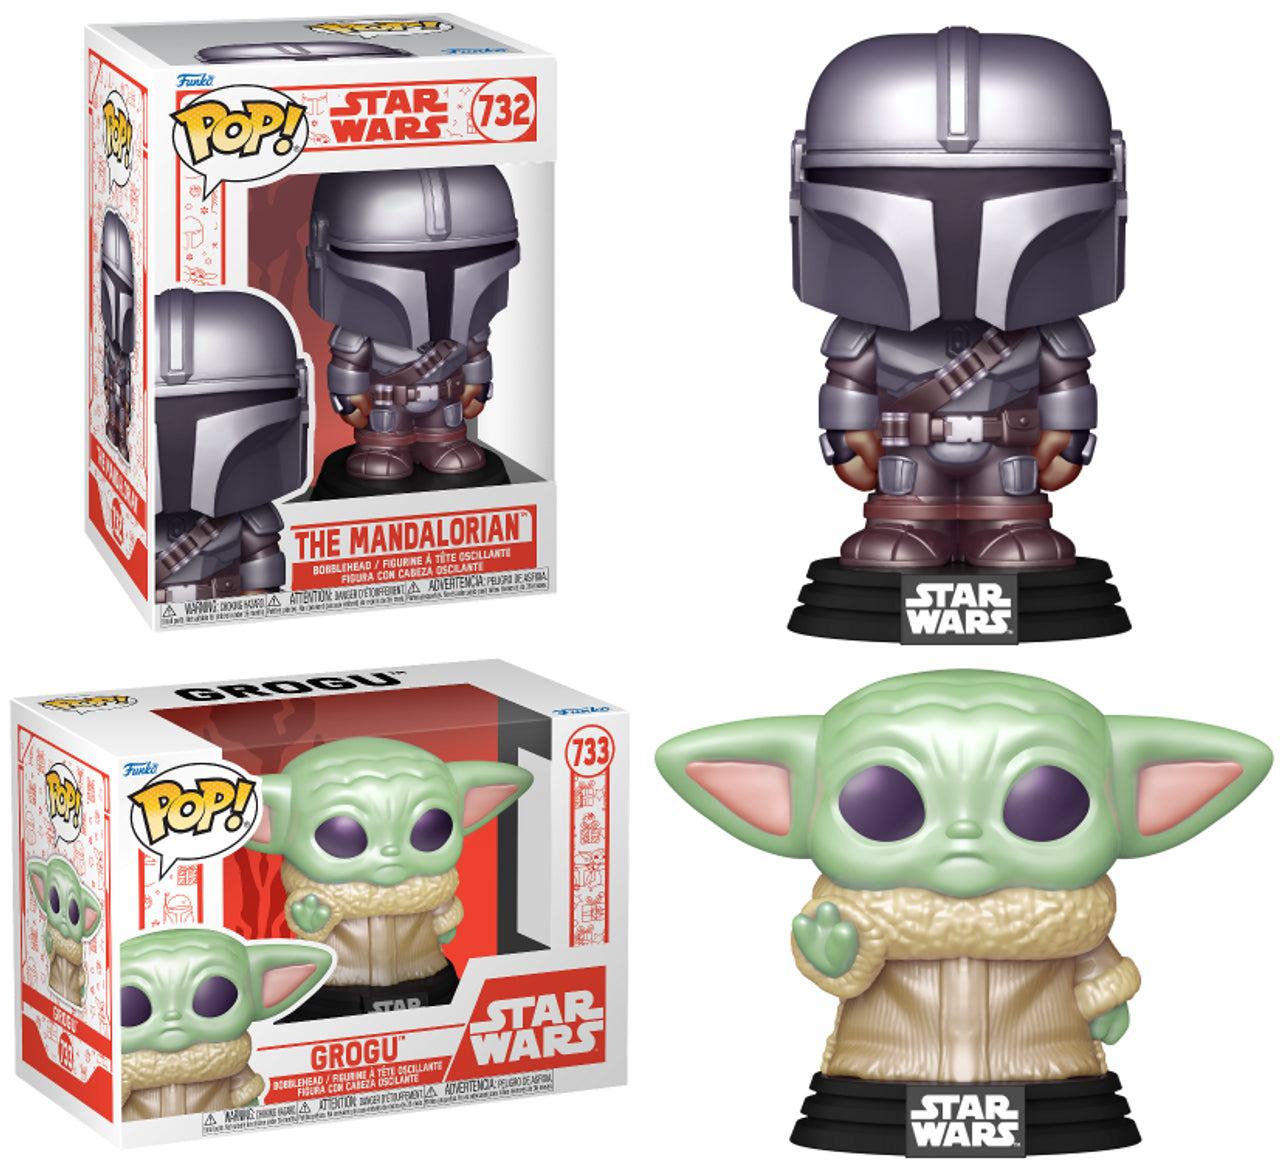 Pop! Complete Set 2 Star Wars Holiday Ornament